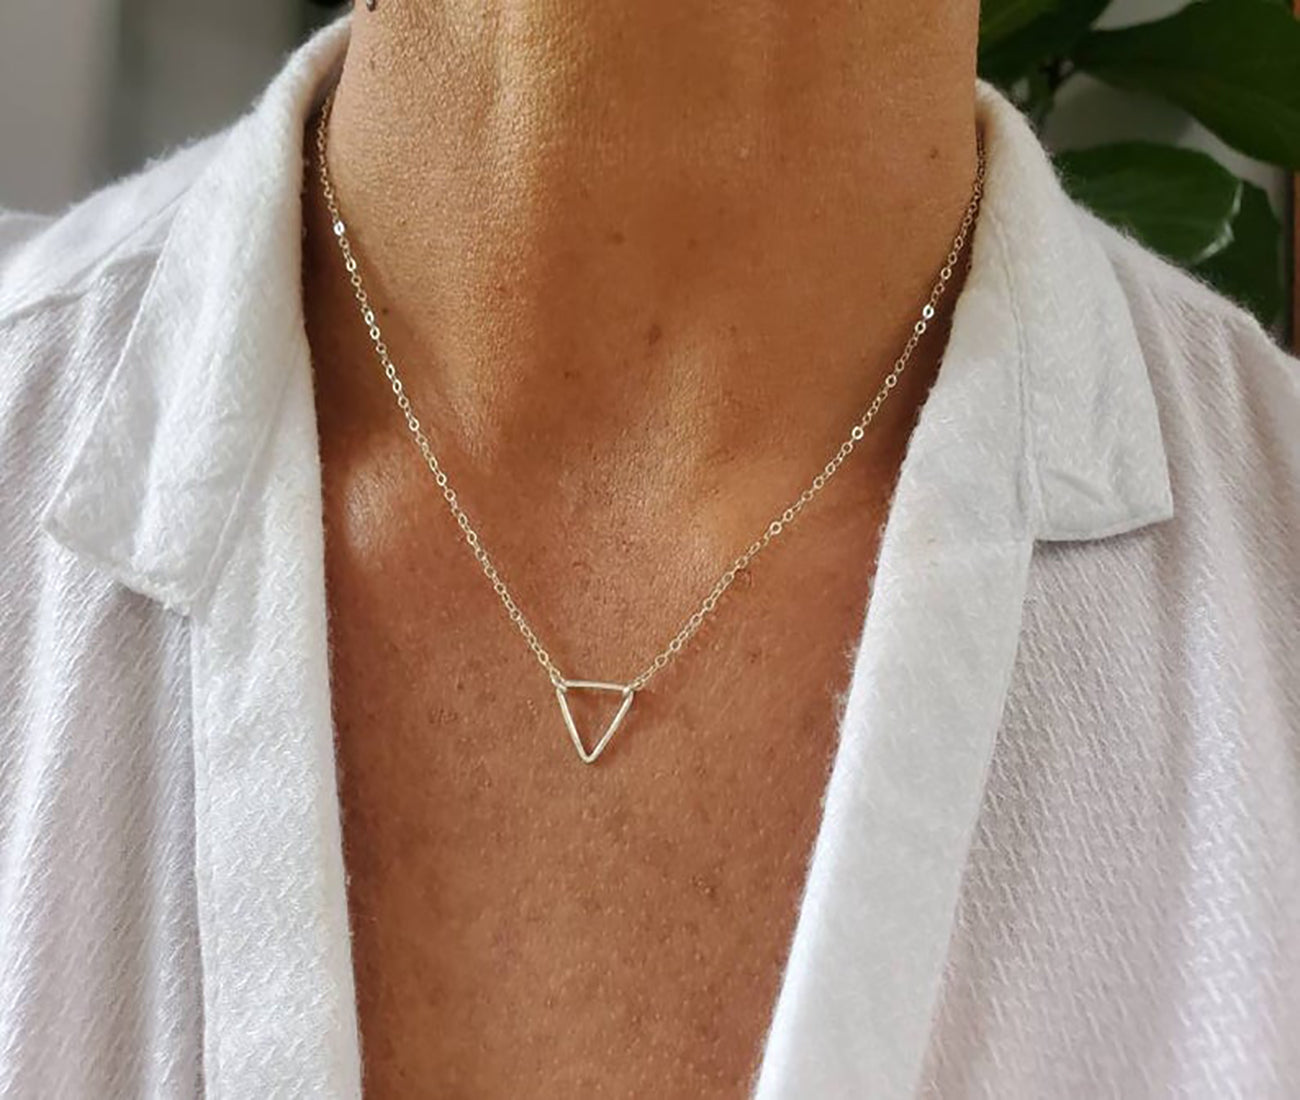 TASISO Tiny Triangle Pendant Necklace